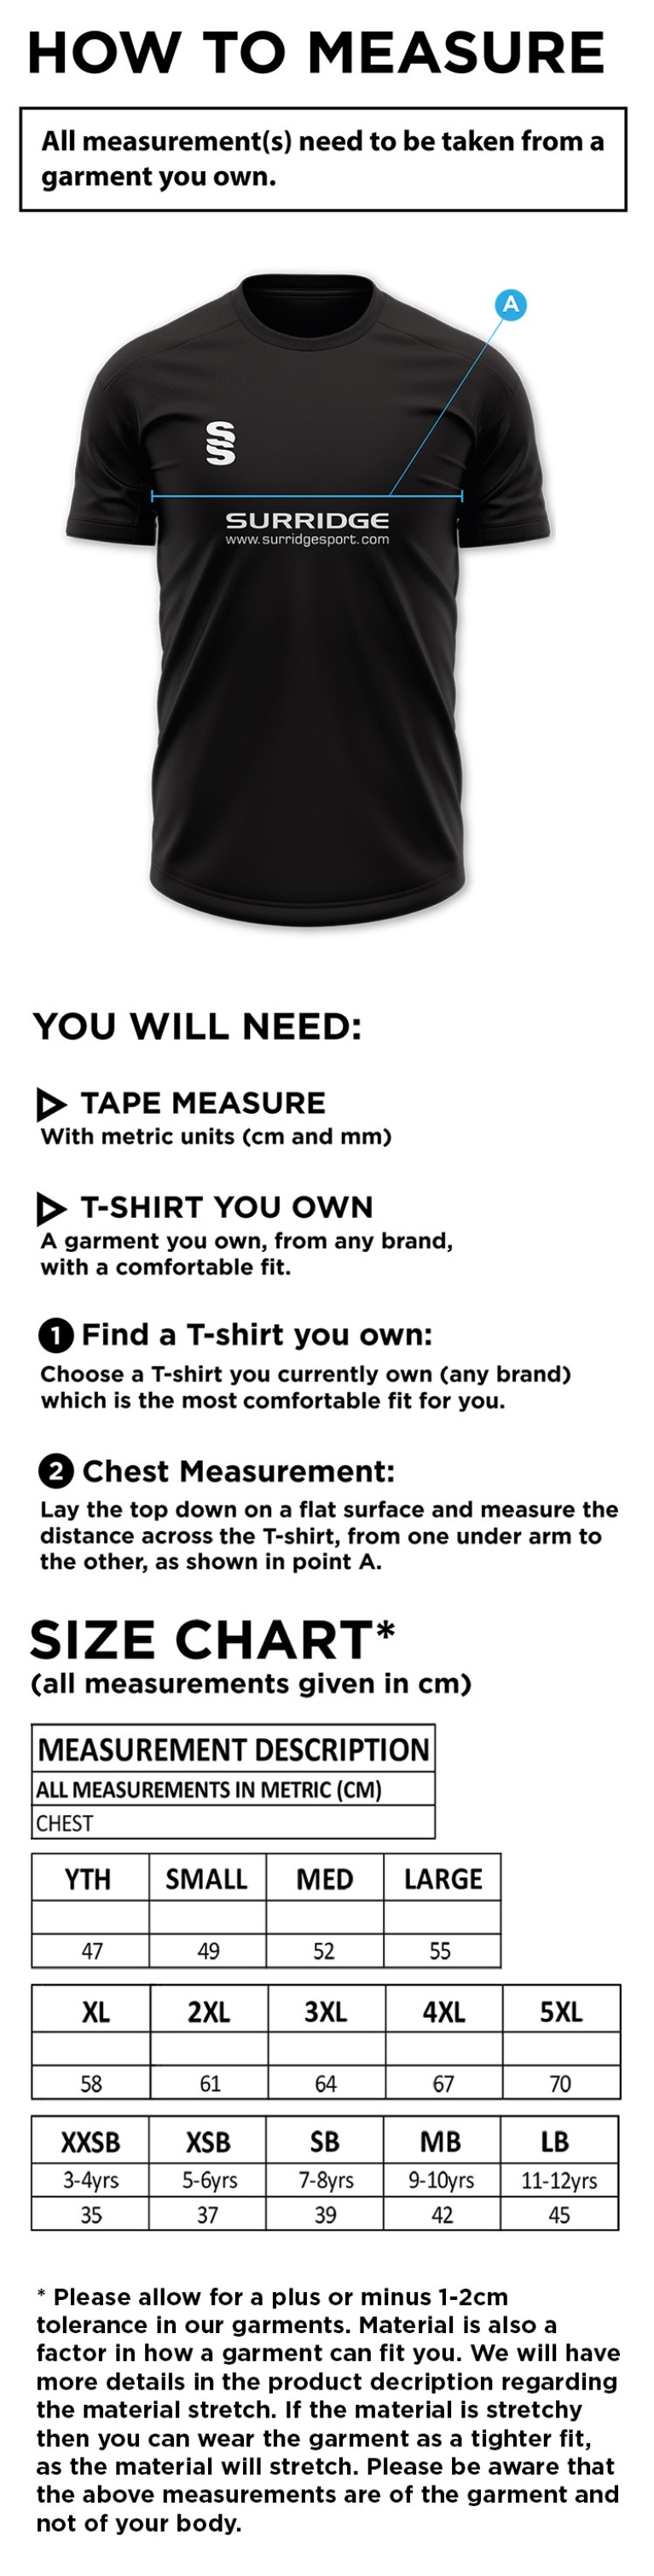 Women's Dual Gym T-shirt : Grey Melange - Size Guide